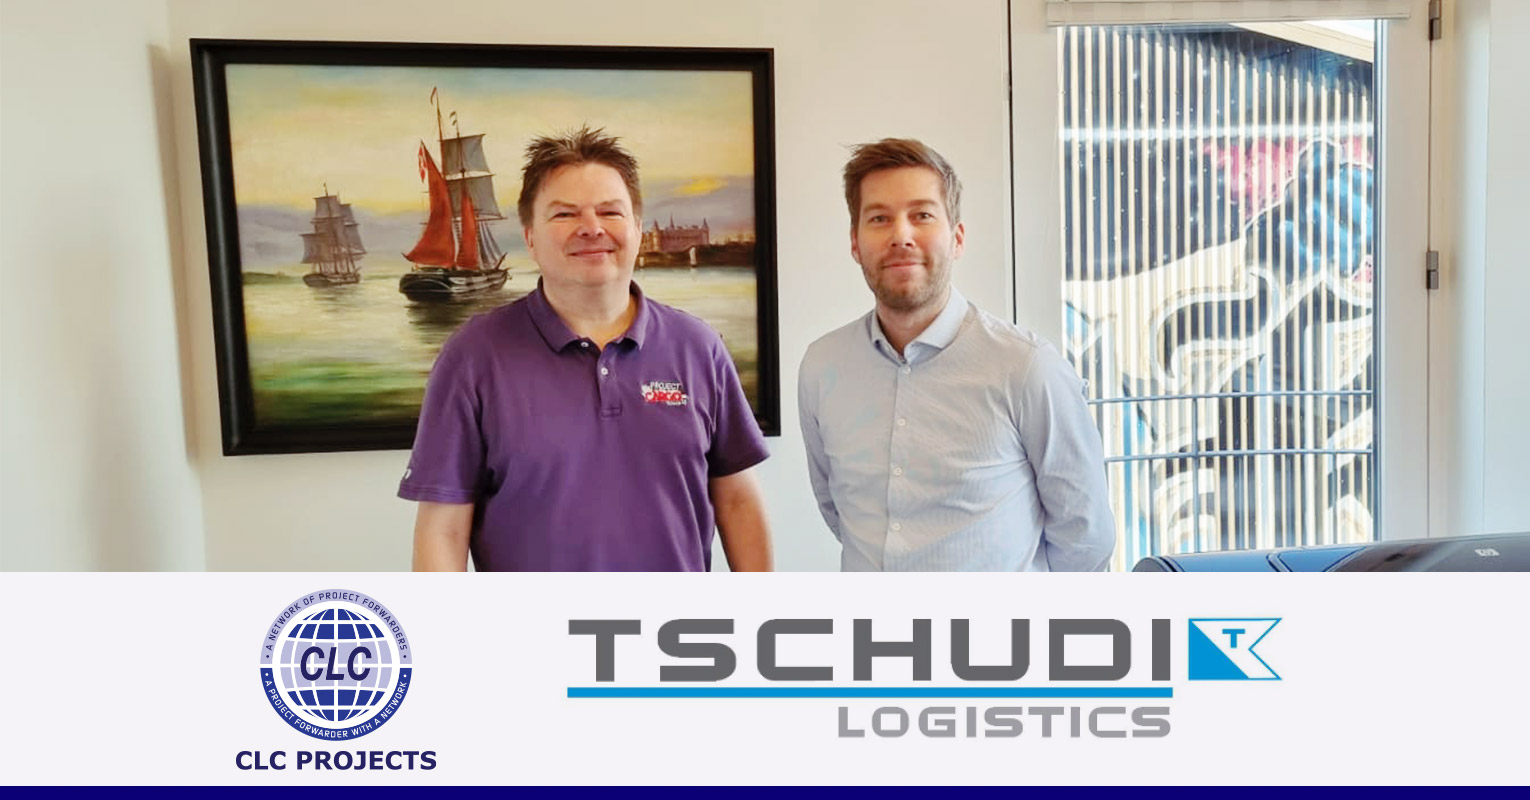 CLC Projects meeting with member, Tschudi Logistics in Aarhus, Denmark